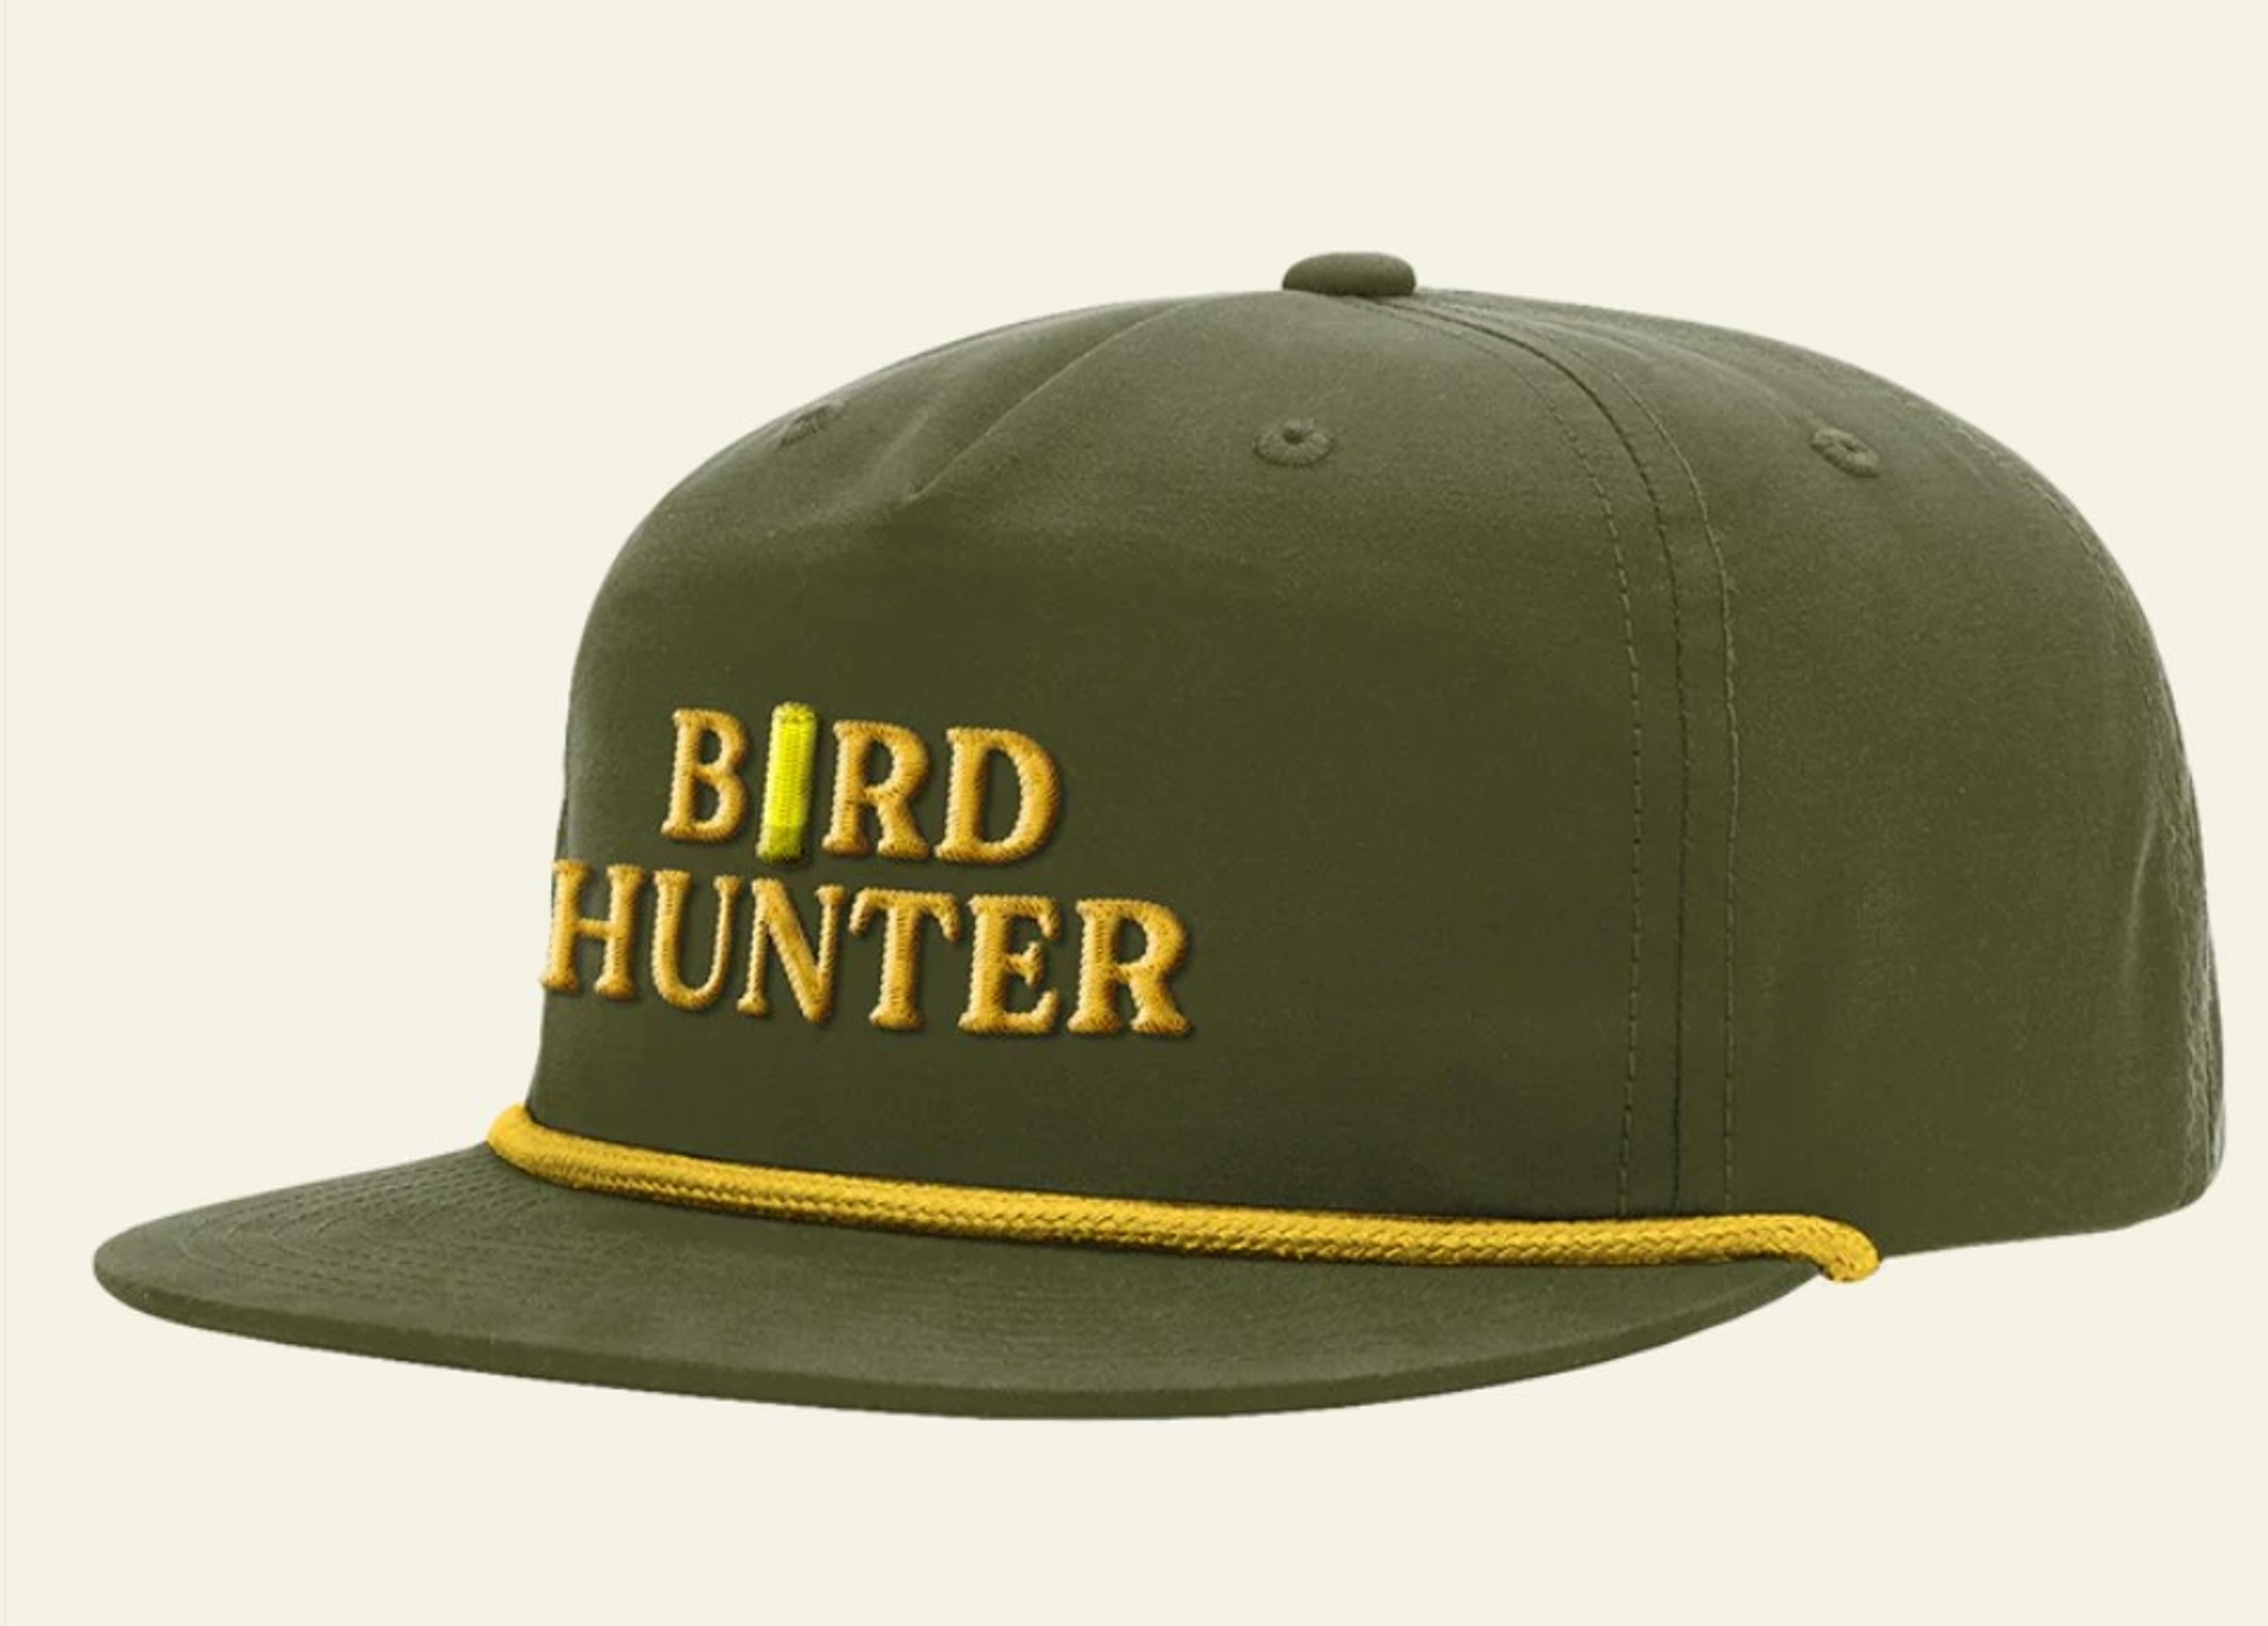  Bird Hunter Rope Hat